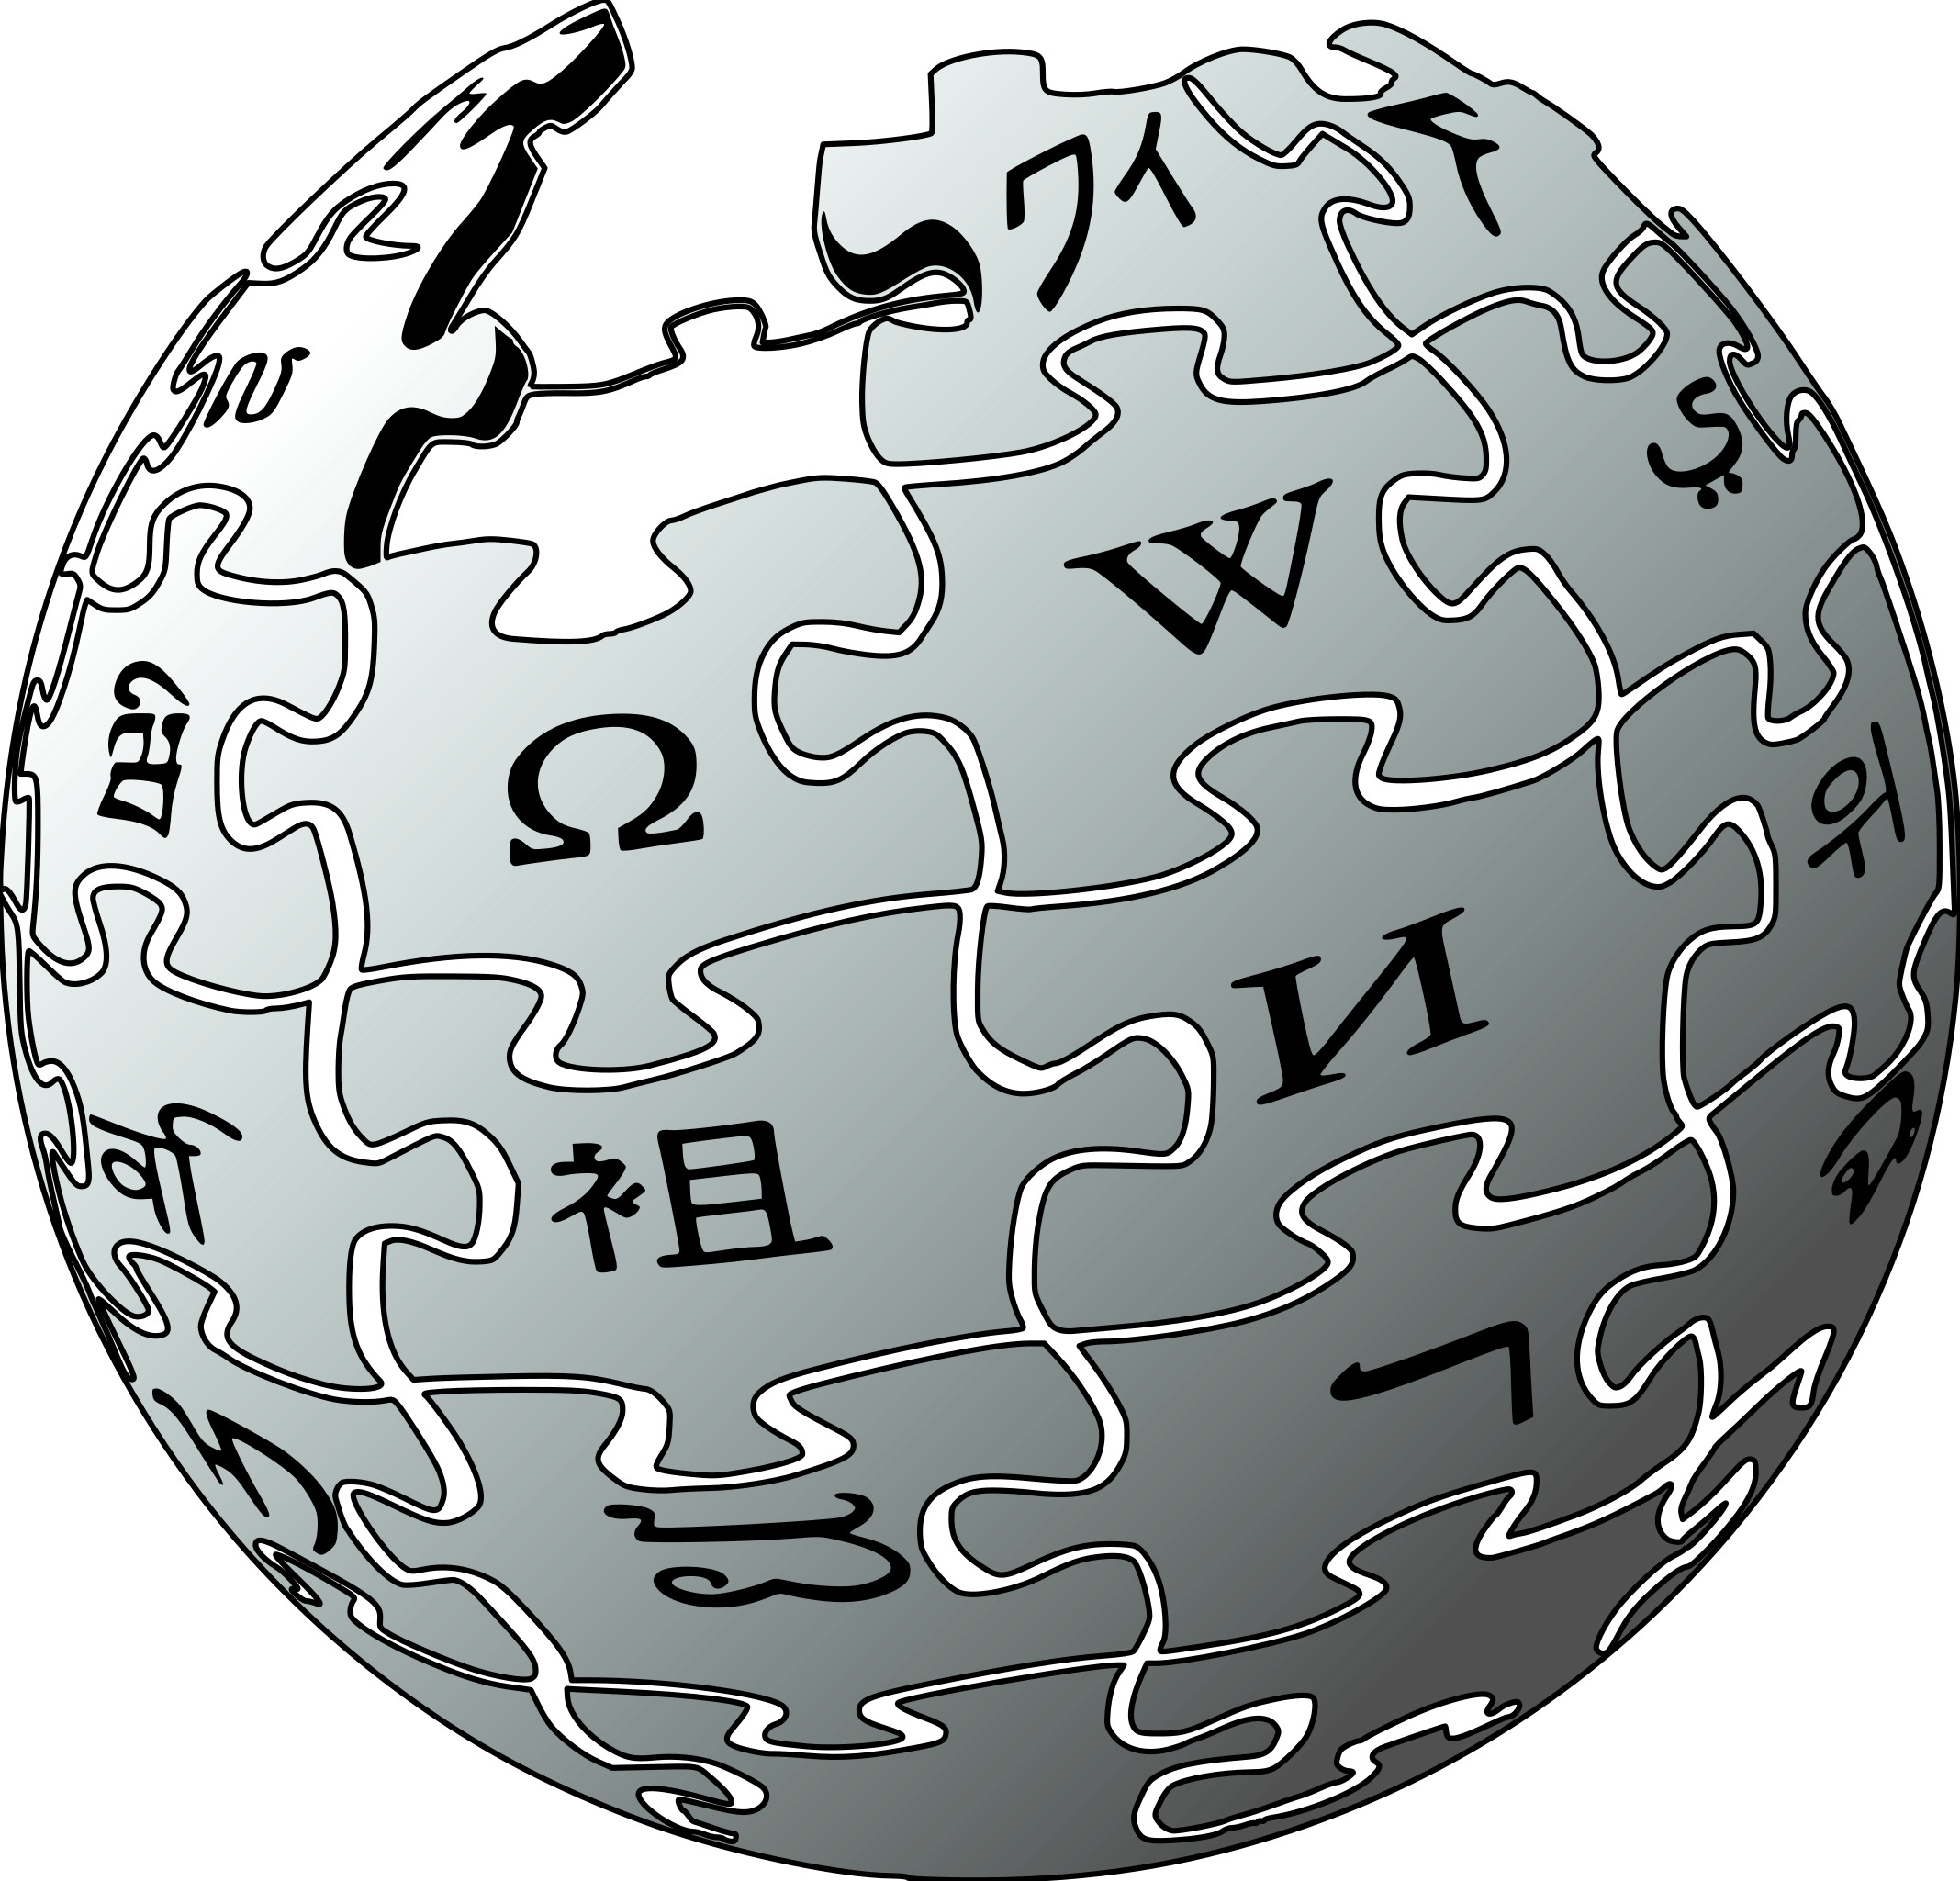 Https www wikipedia. Значок Википедии. Википедия логотип. Википедия картинки. Логотип Википедии на прозрачном фоне.